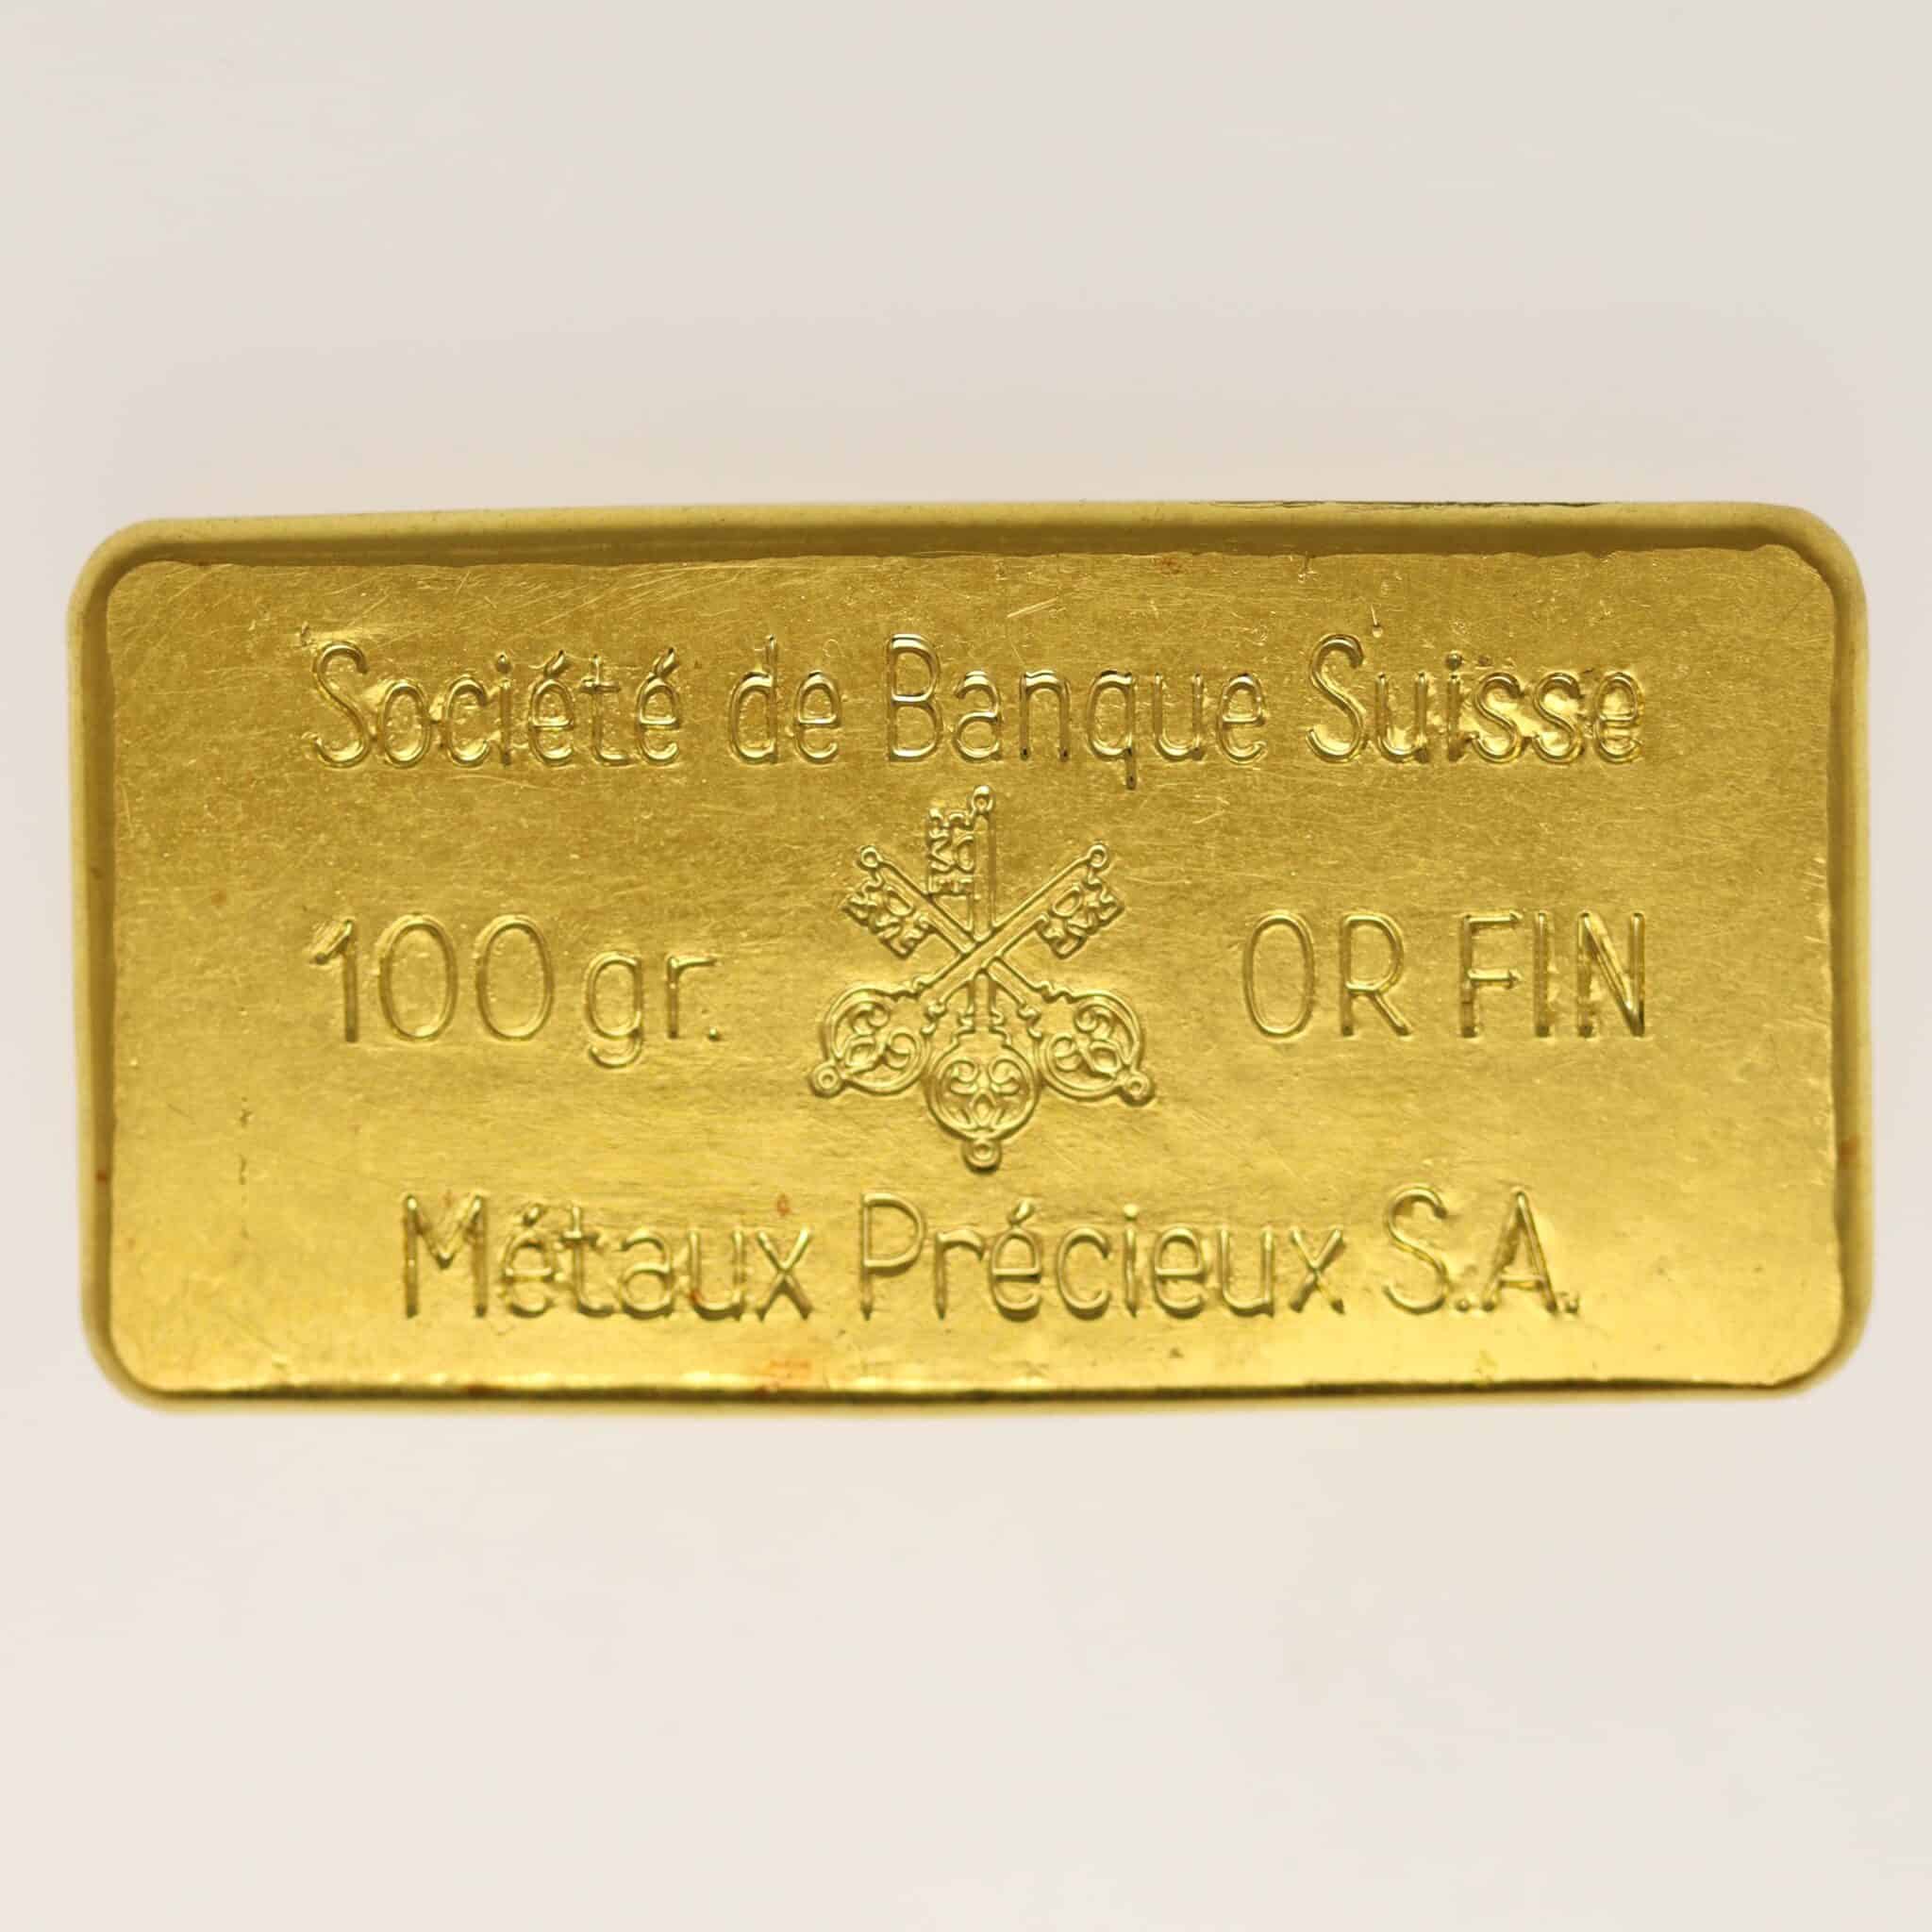 goldbarren - Goldbarren 100 Gramm SBS Societe de Banque Suisse